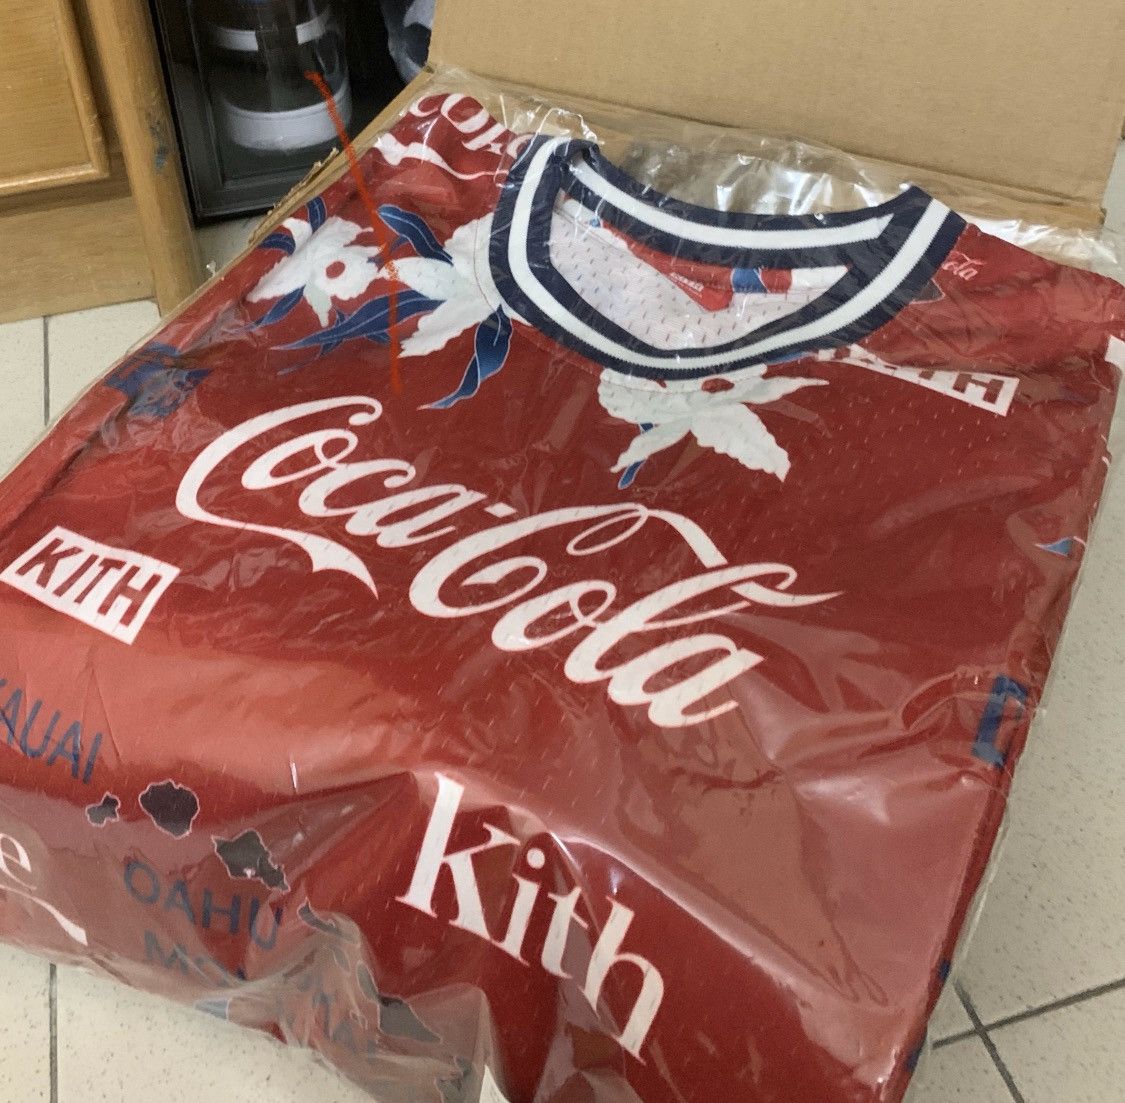 Kith Kith x Coca-Cola x Mitchell & Ness BP Hawaii Jersey | Grailed